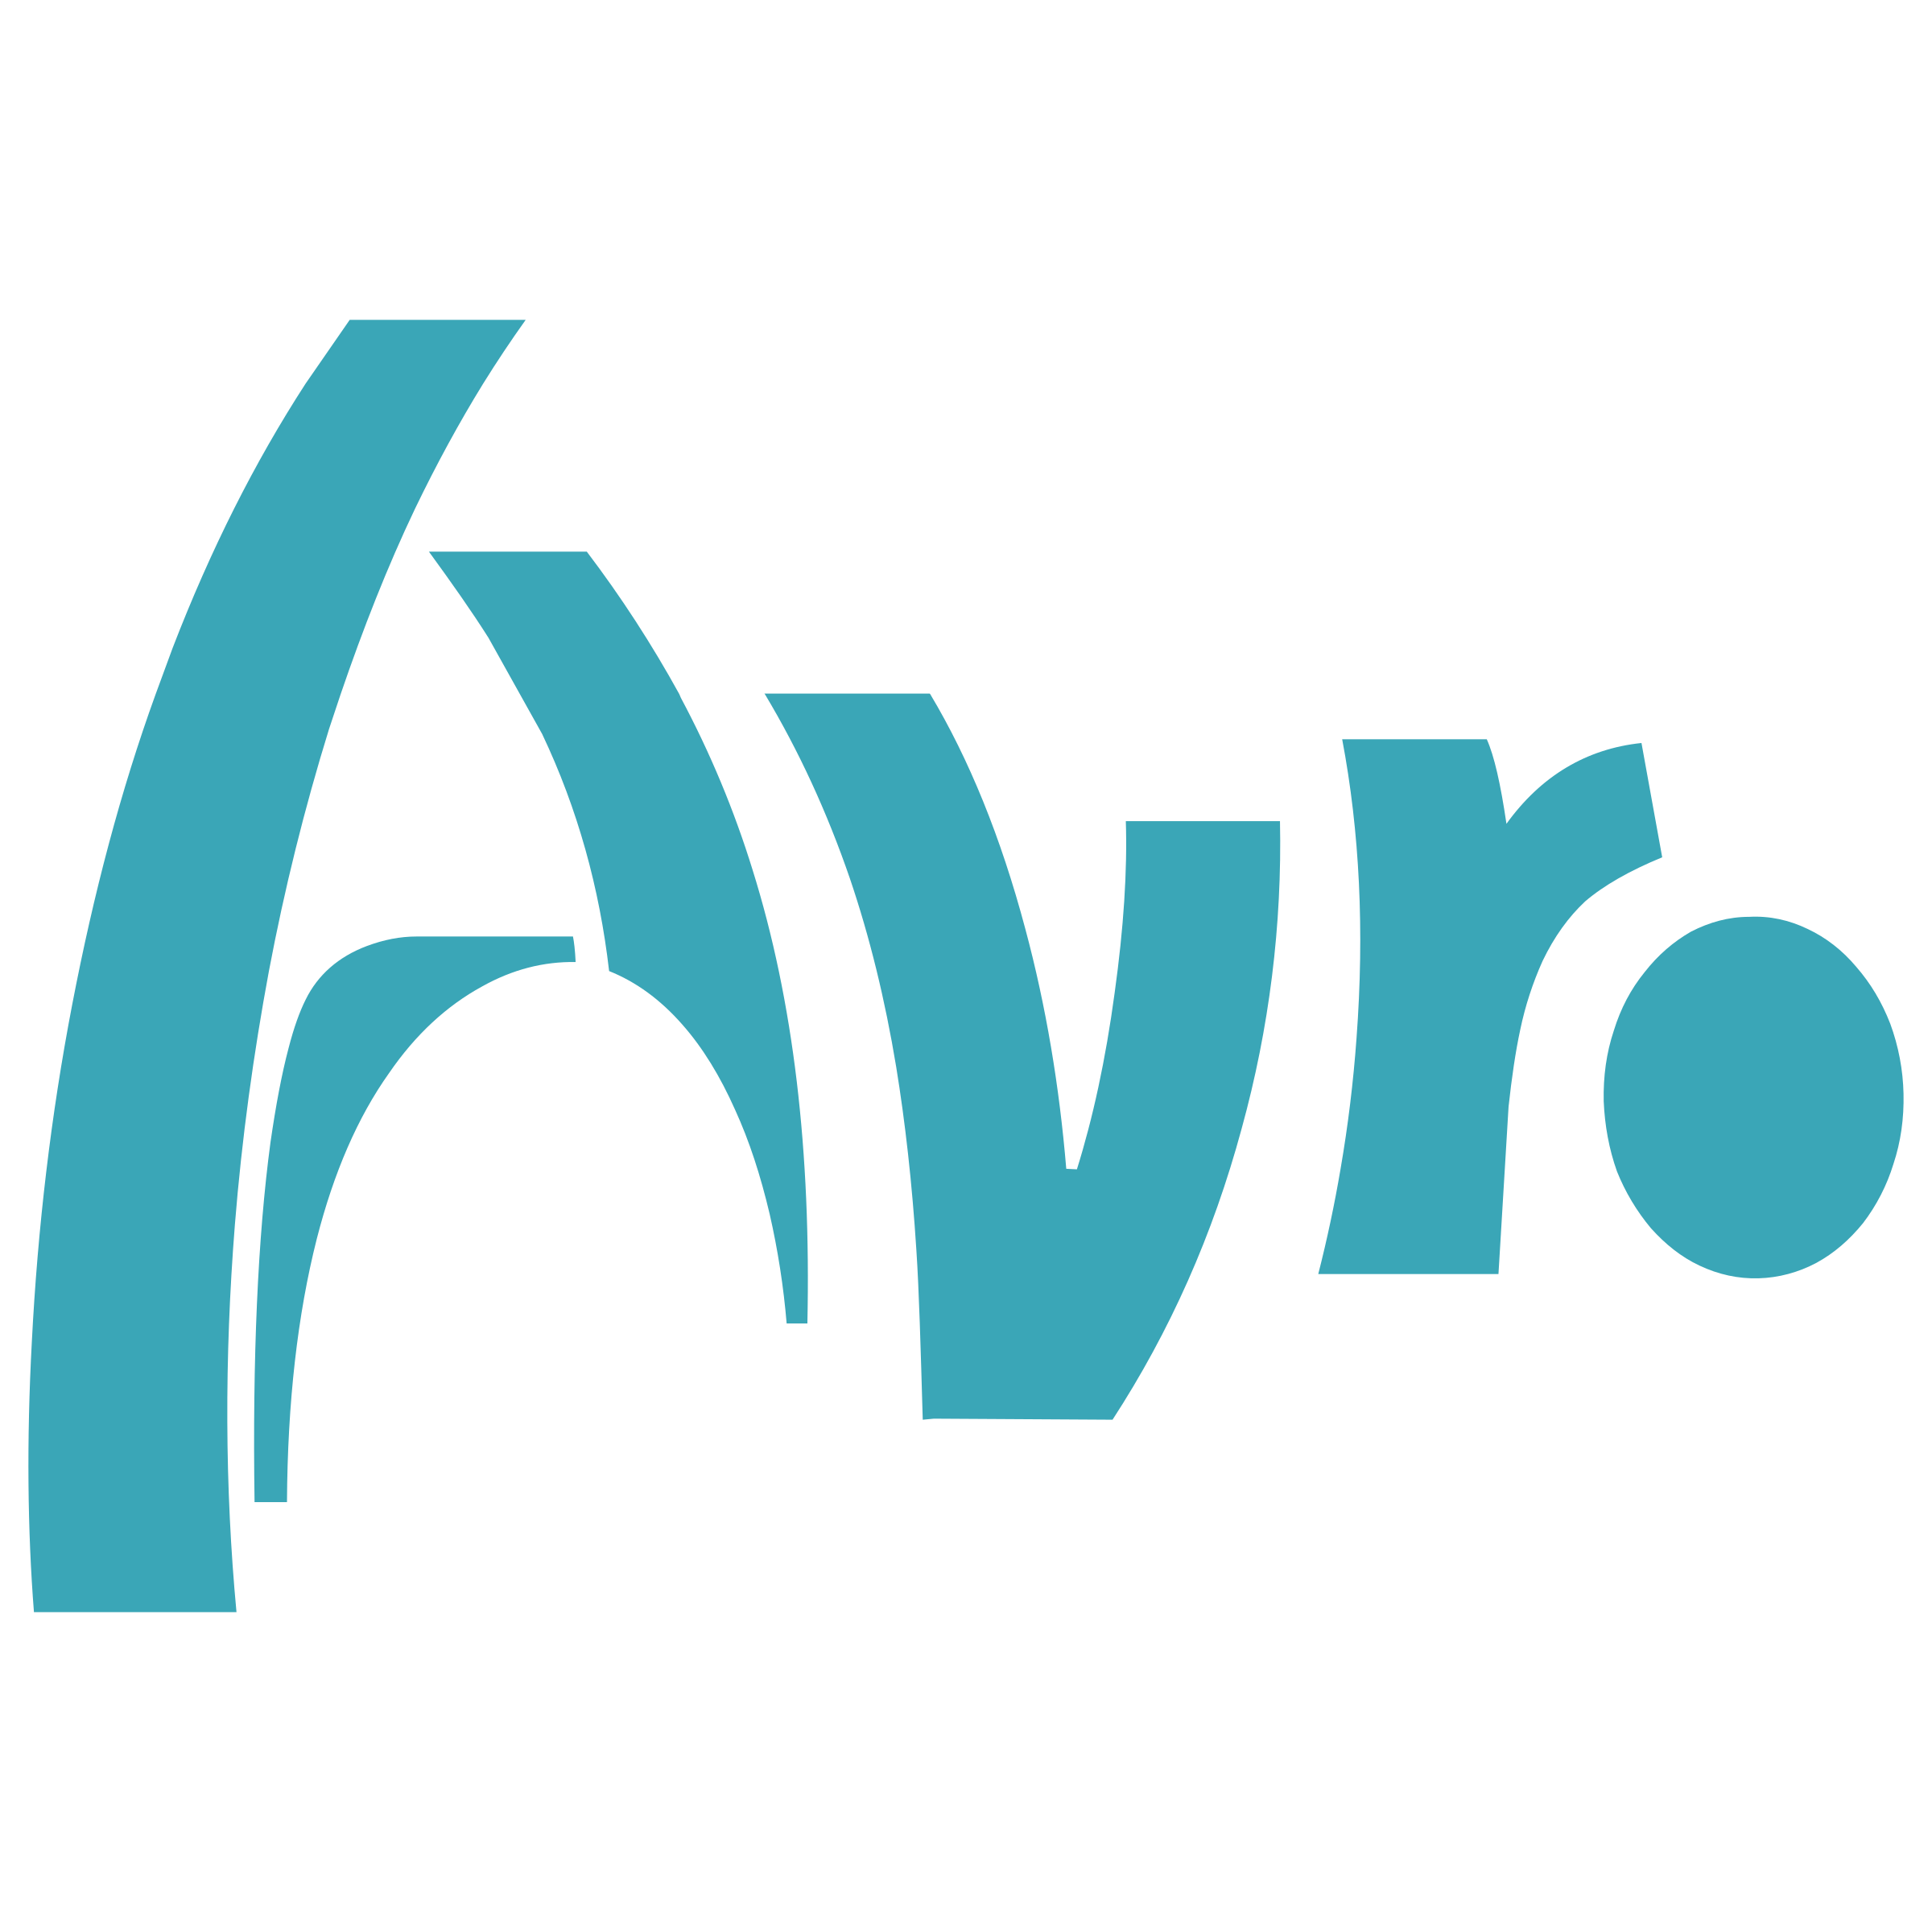 Avro Logo - AVRO Logo PNG Transparent & SVG Vector - Freebie Supply